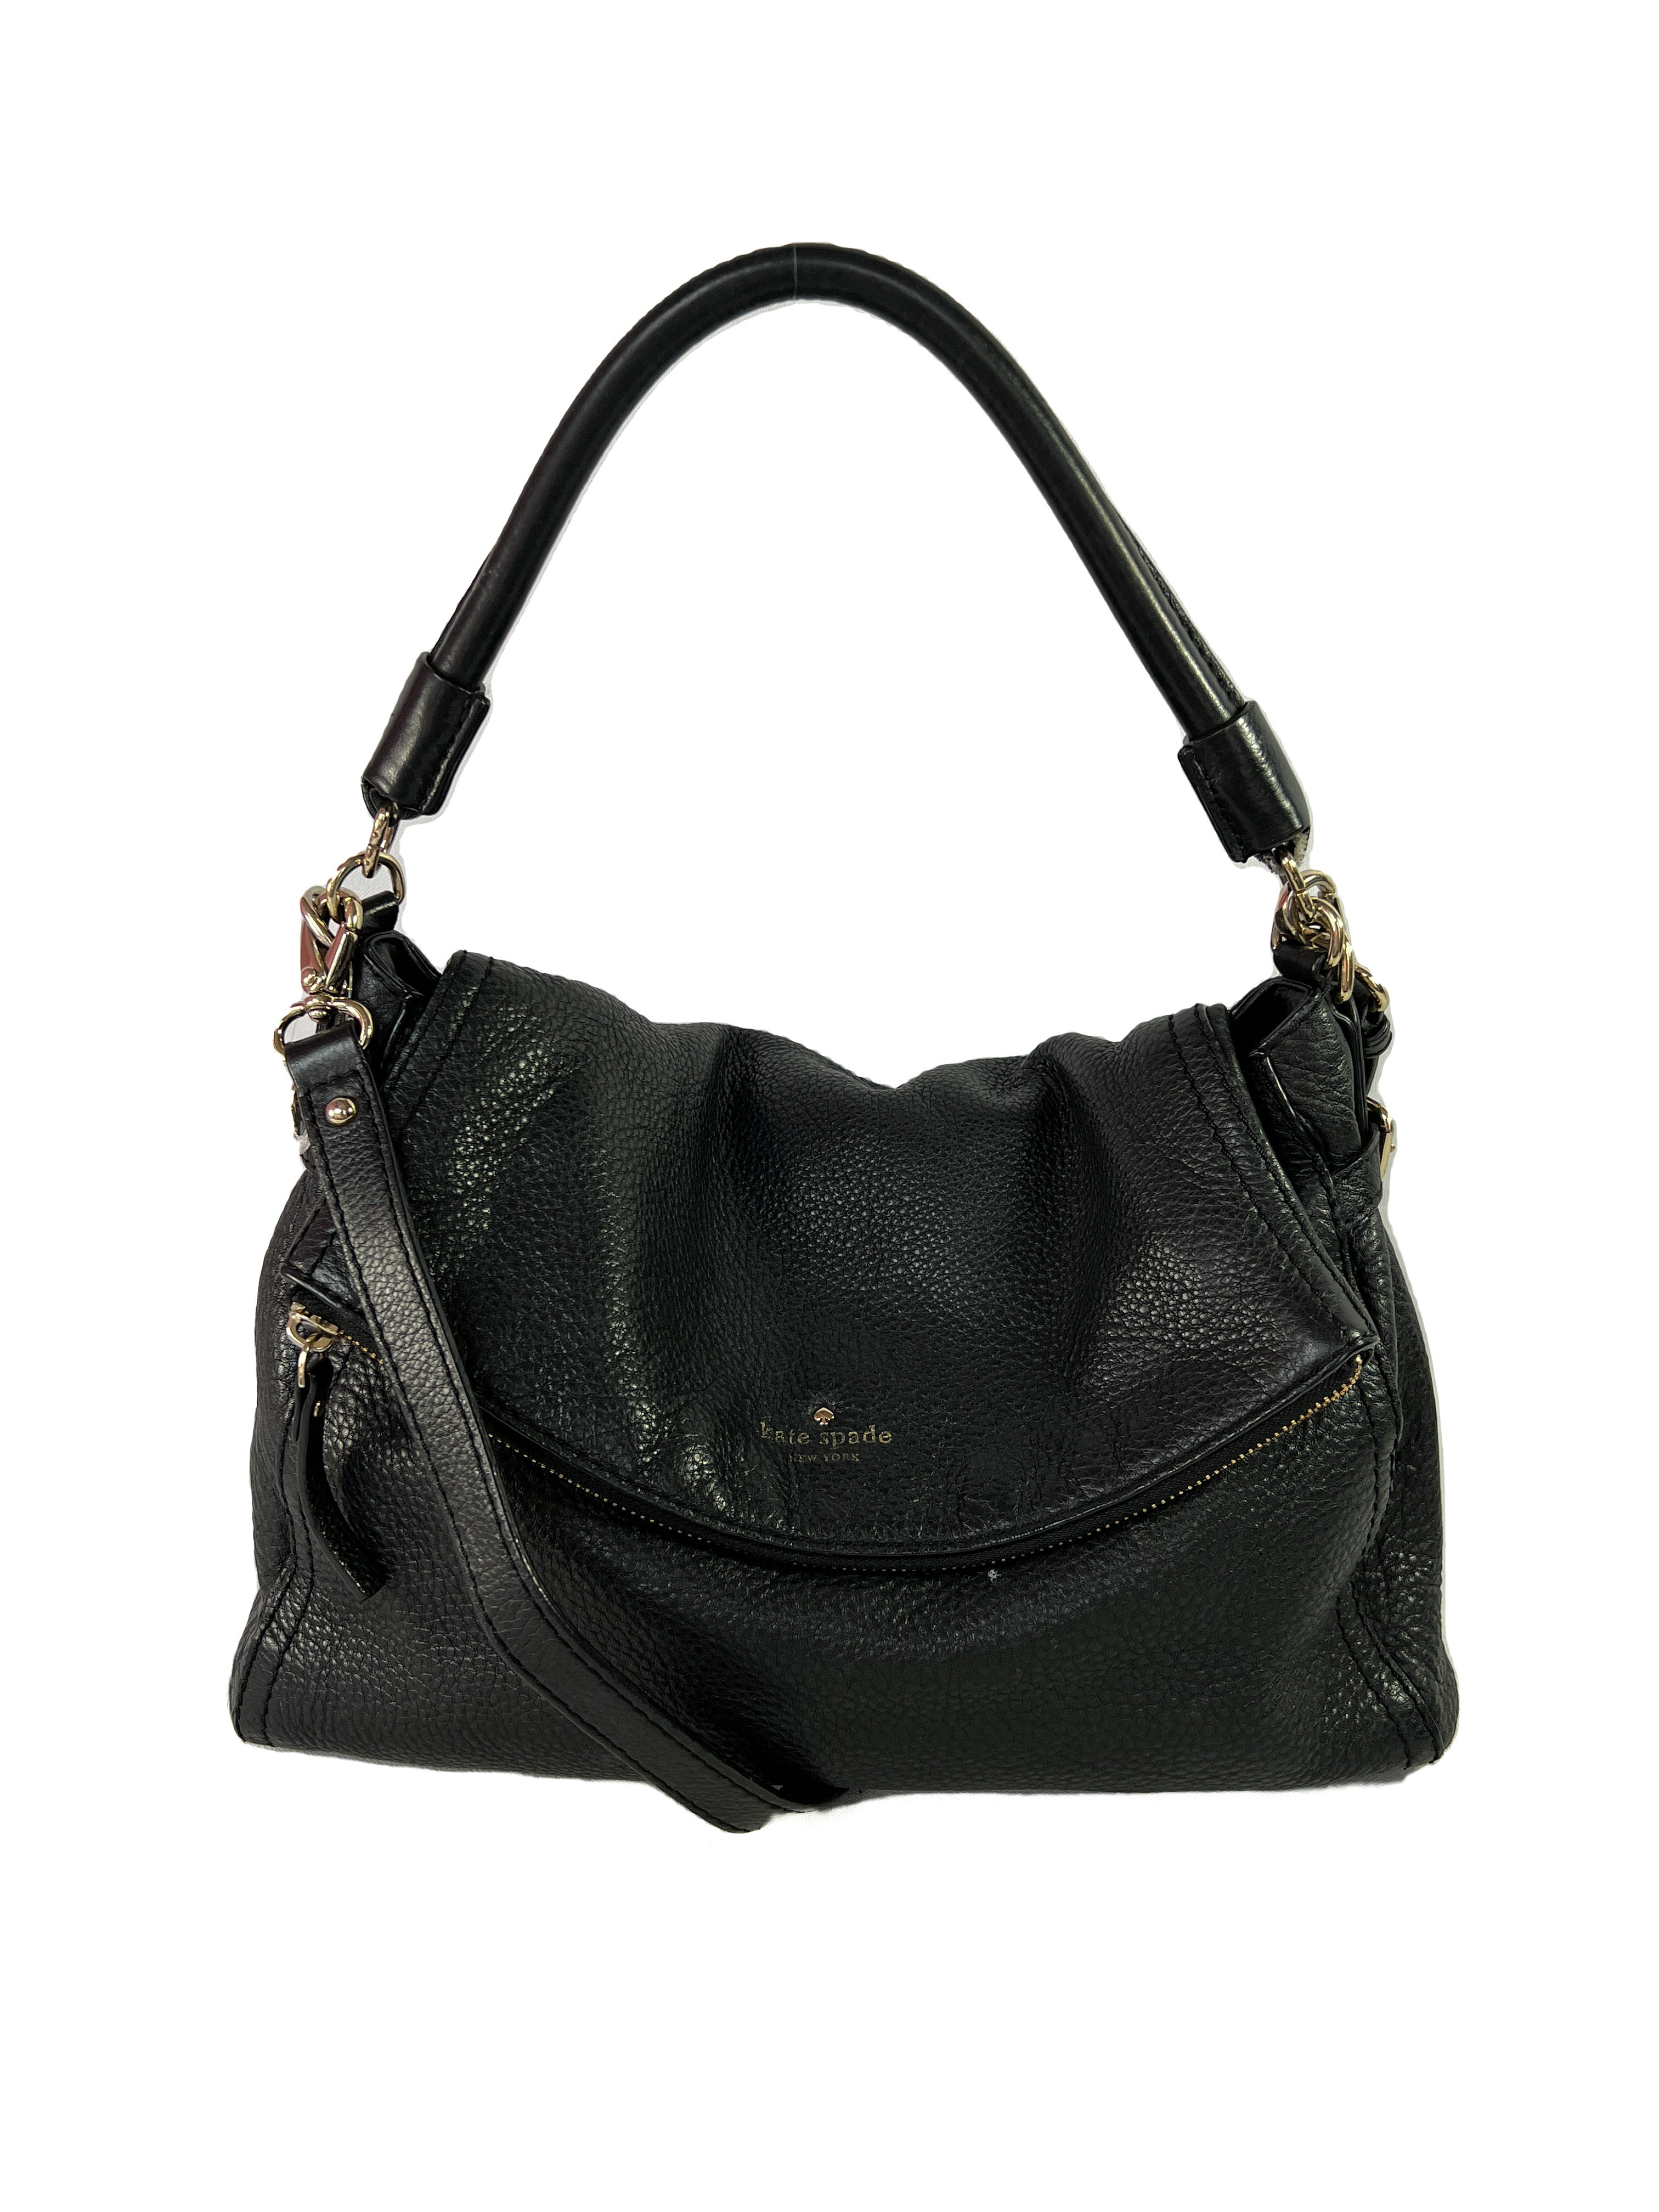 Kate Spade New York Chain-Link Saffiano Leather Crossbody Bag - Black  Crossbody Bags, Handbags - WKA336980